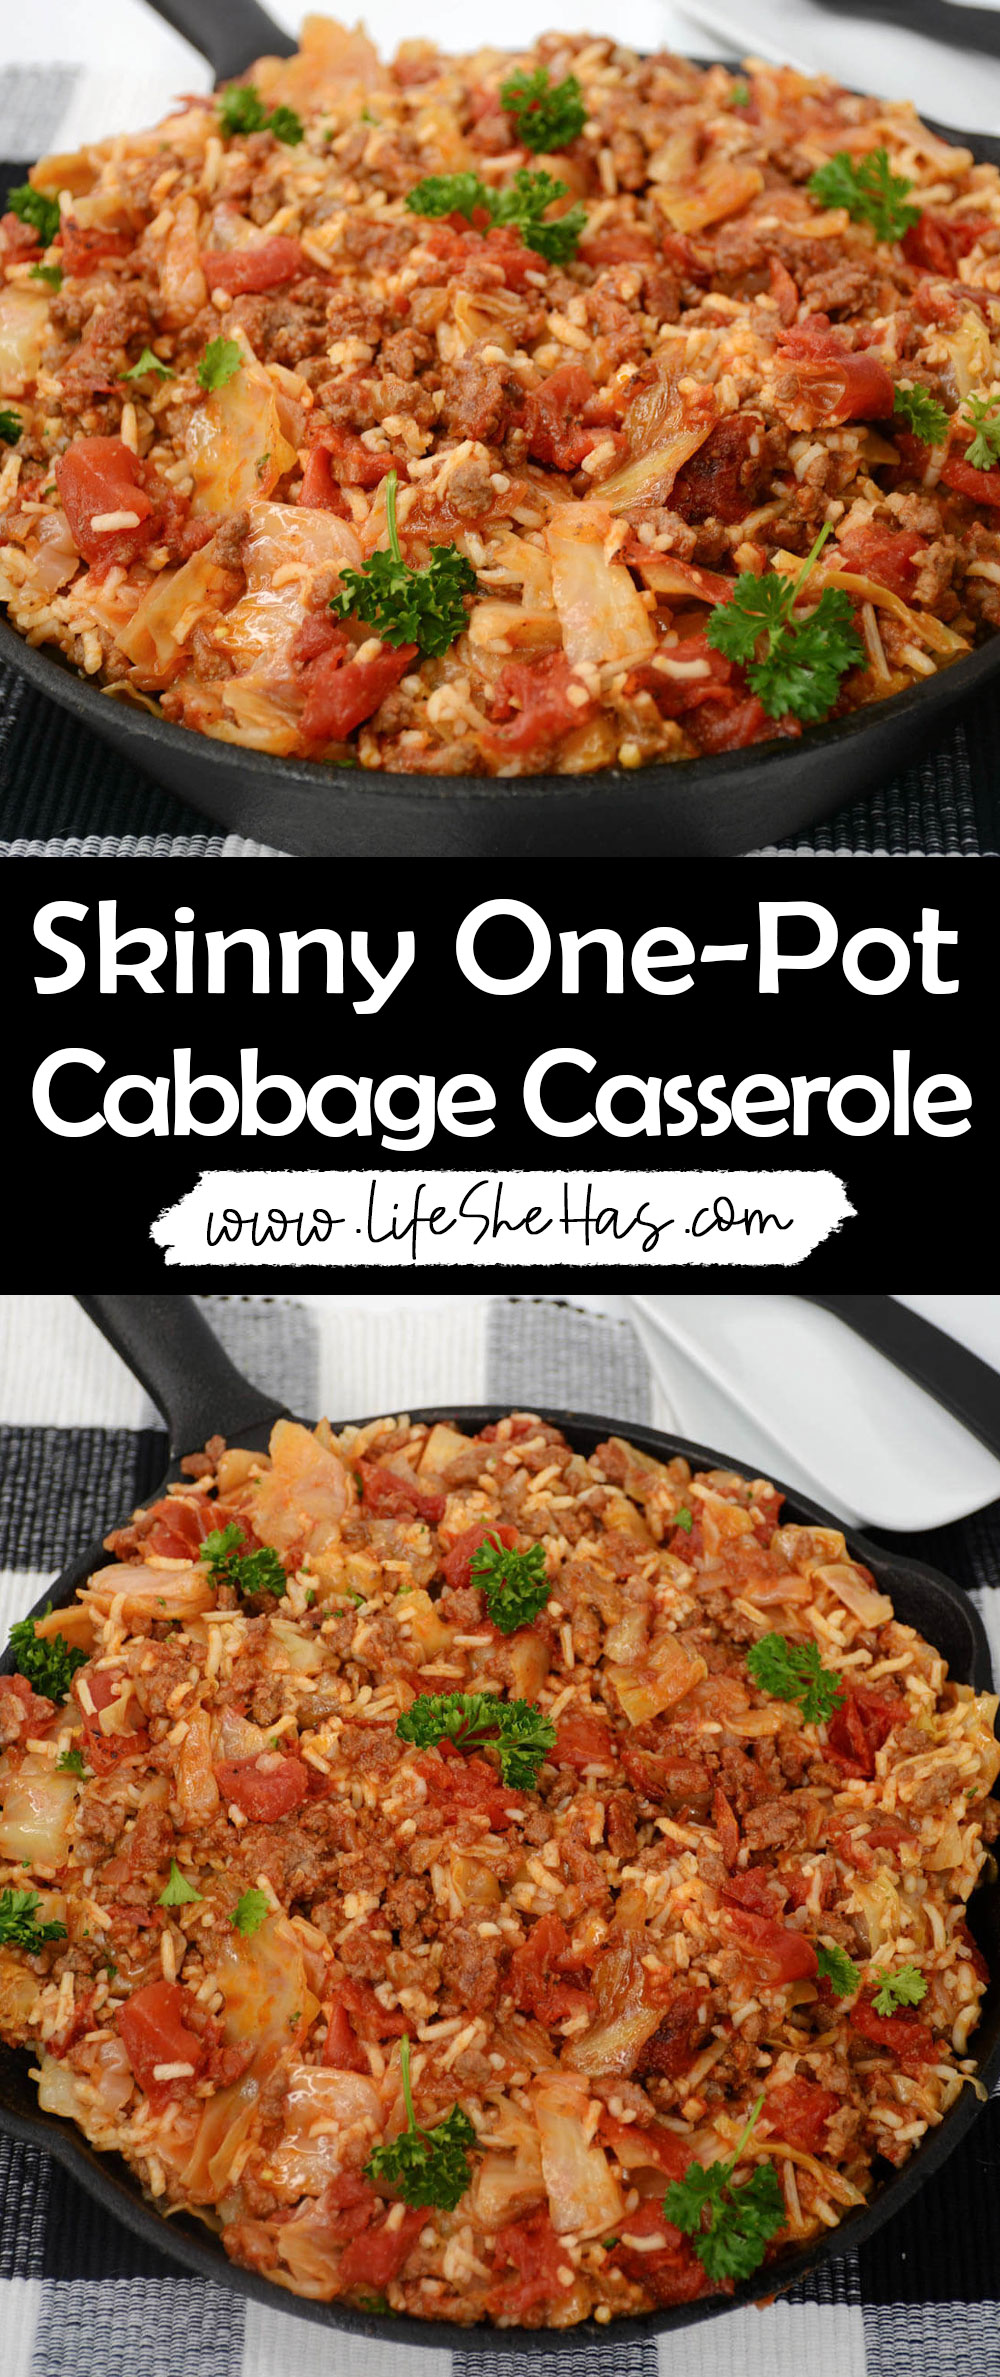 Skinny One-Pot Cabbage Casserole